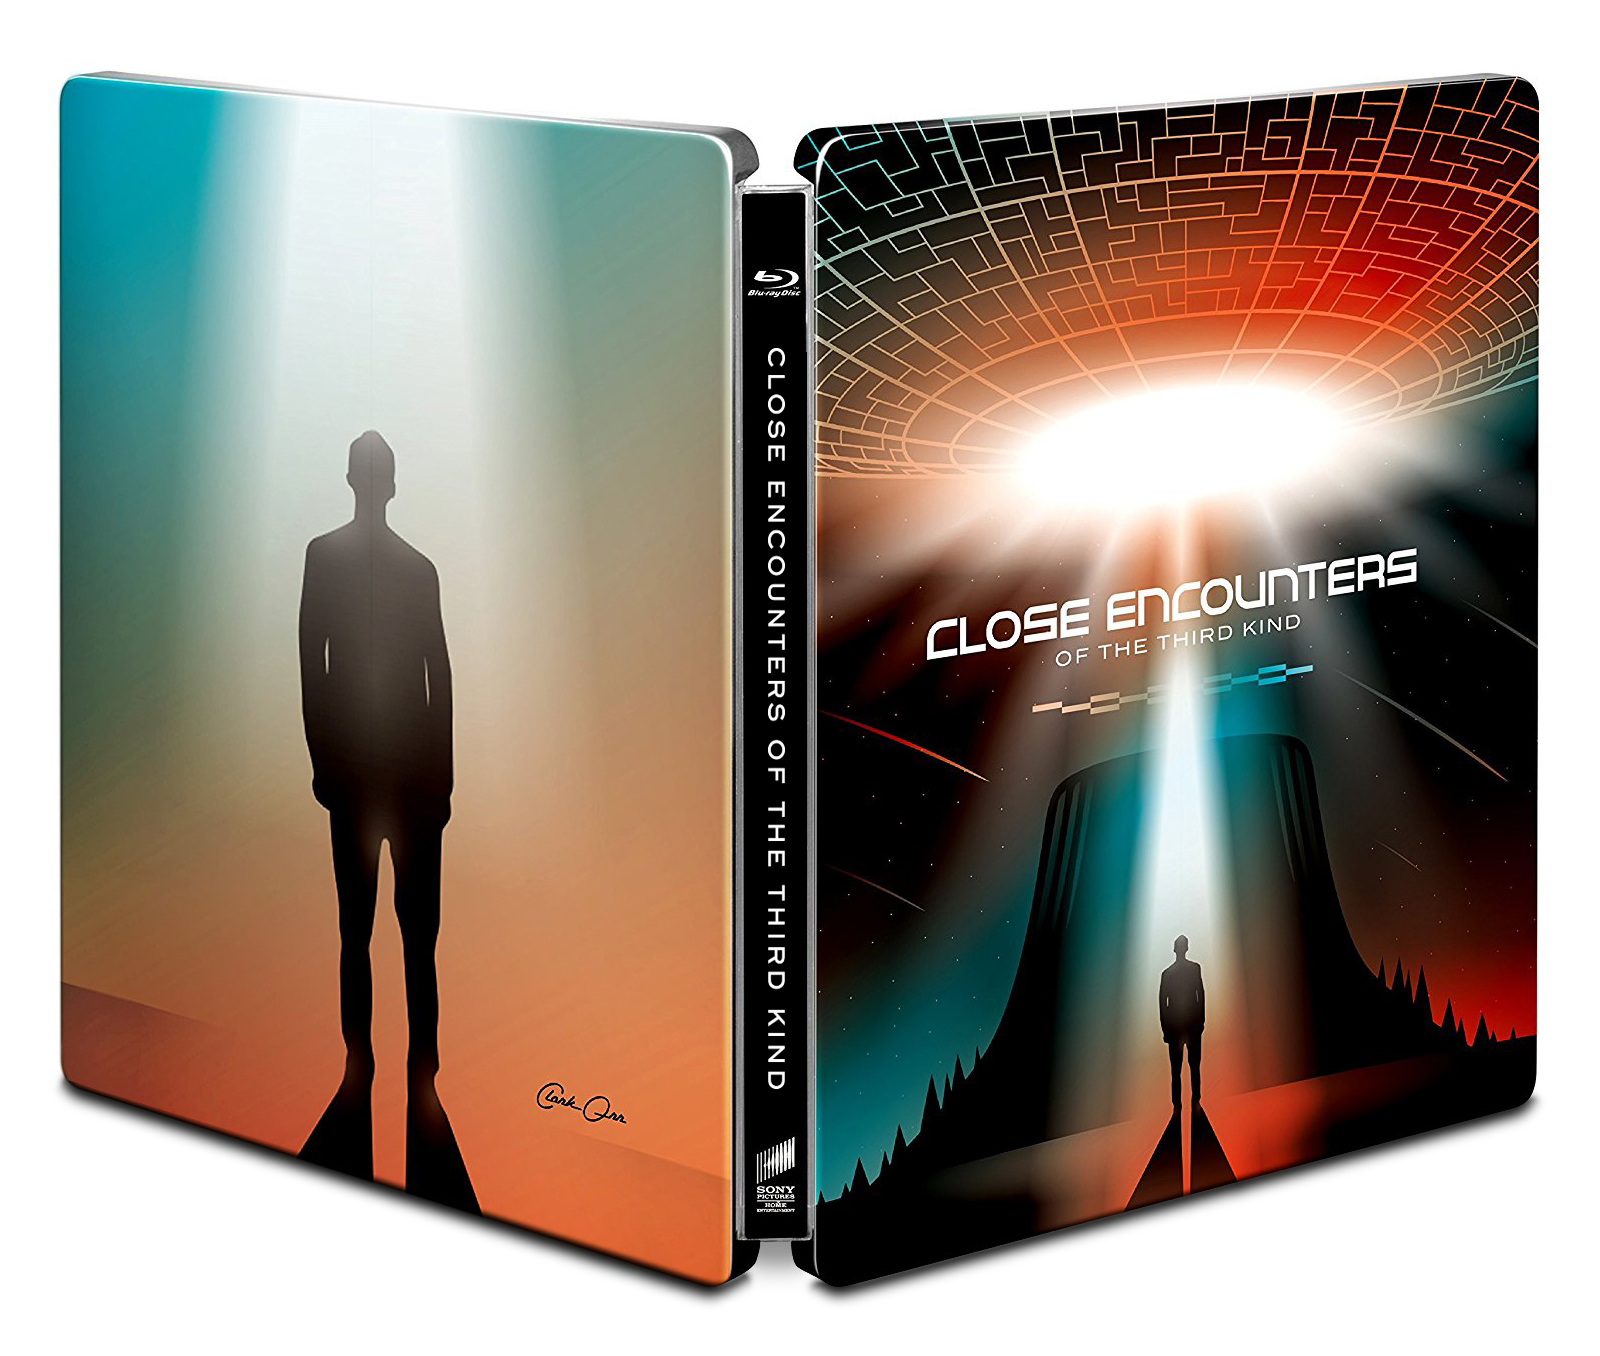 CODC_close_encounters_dvd3.jpg